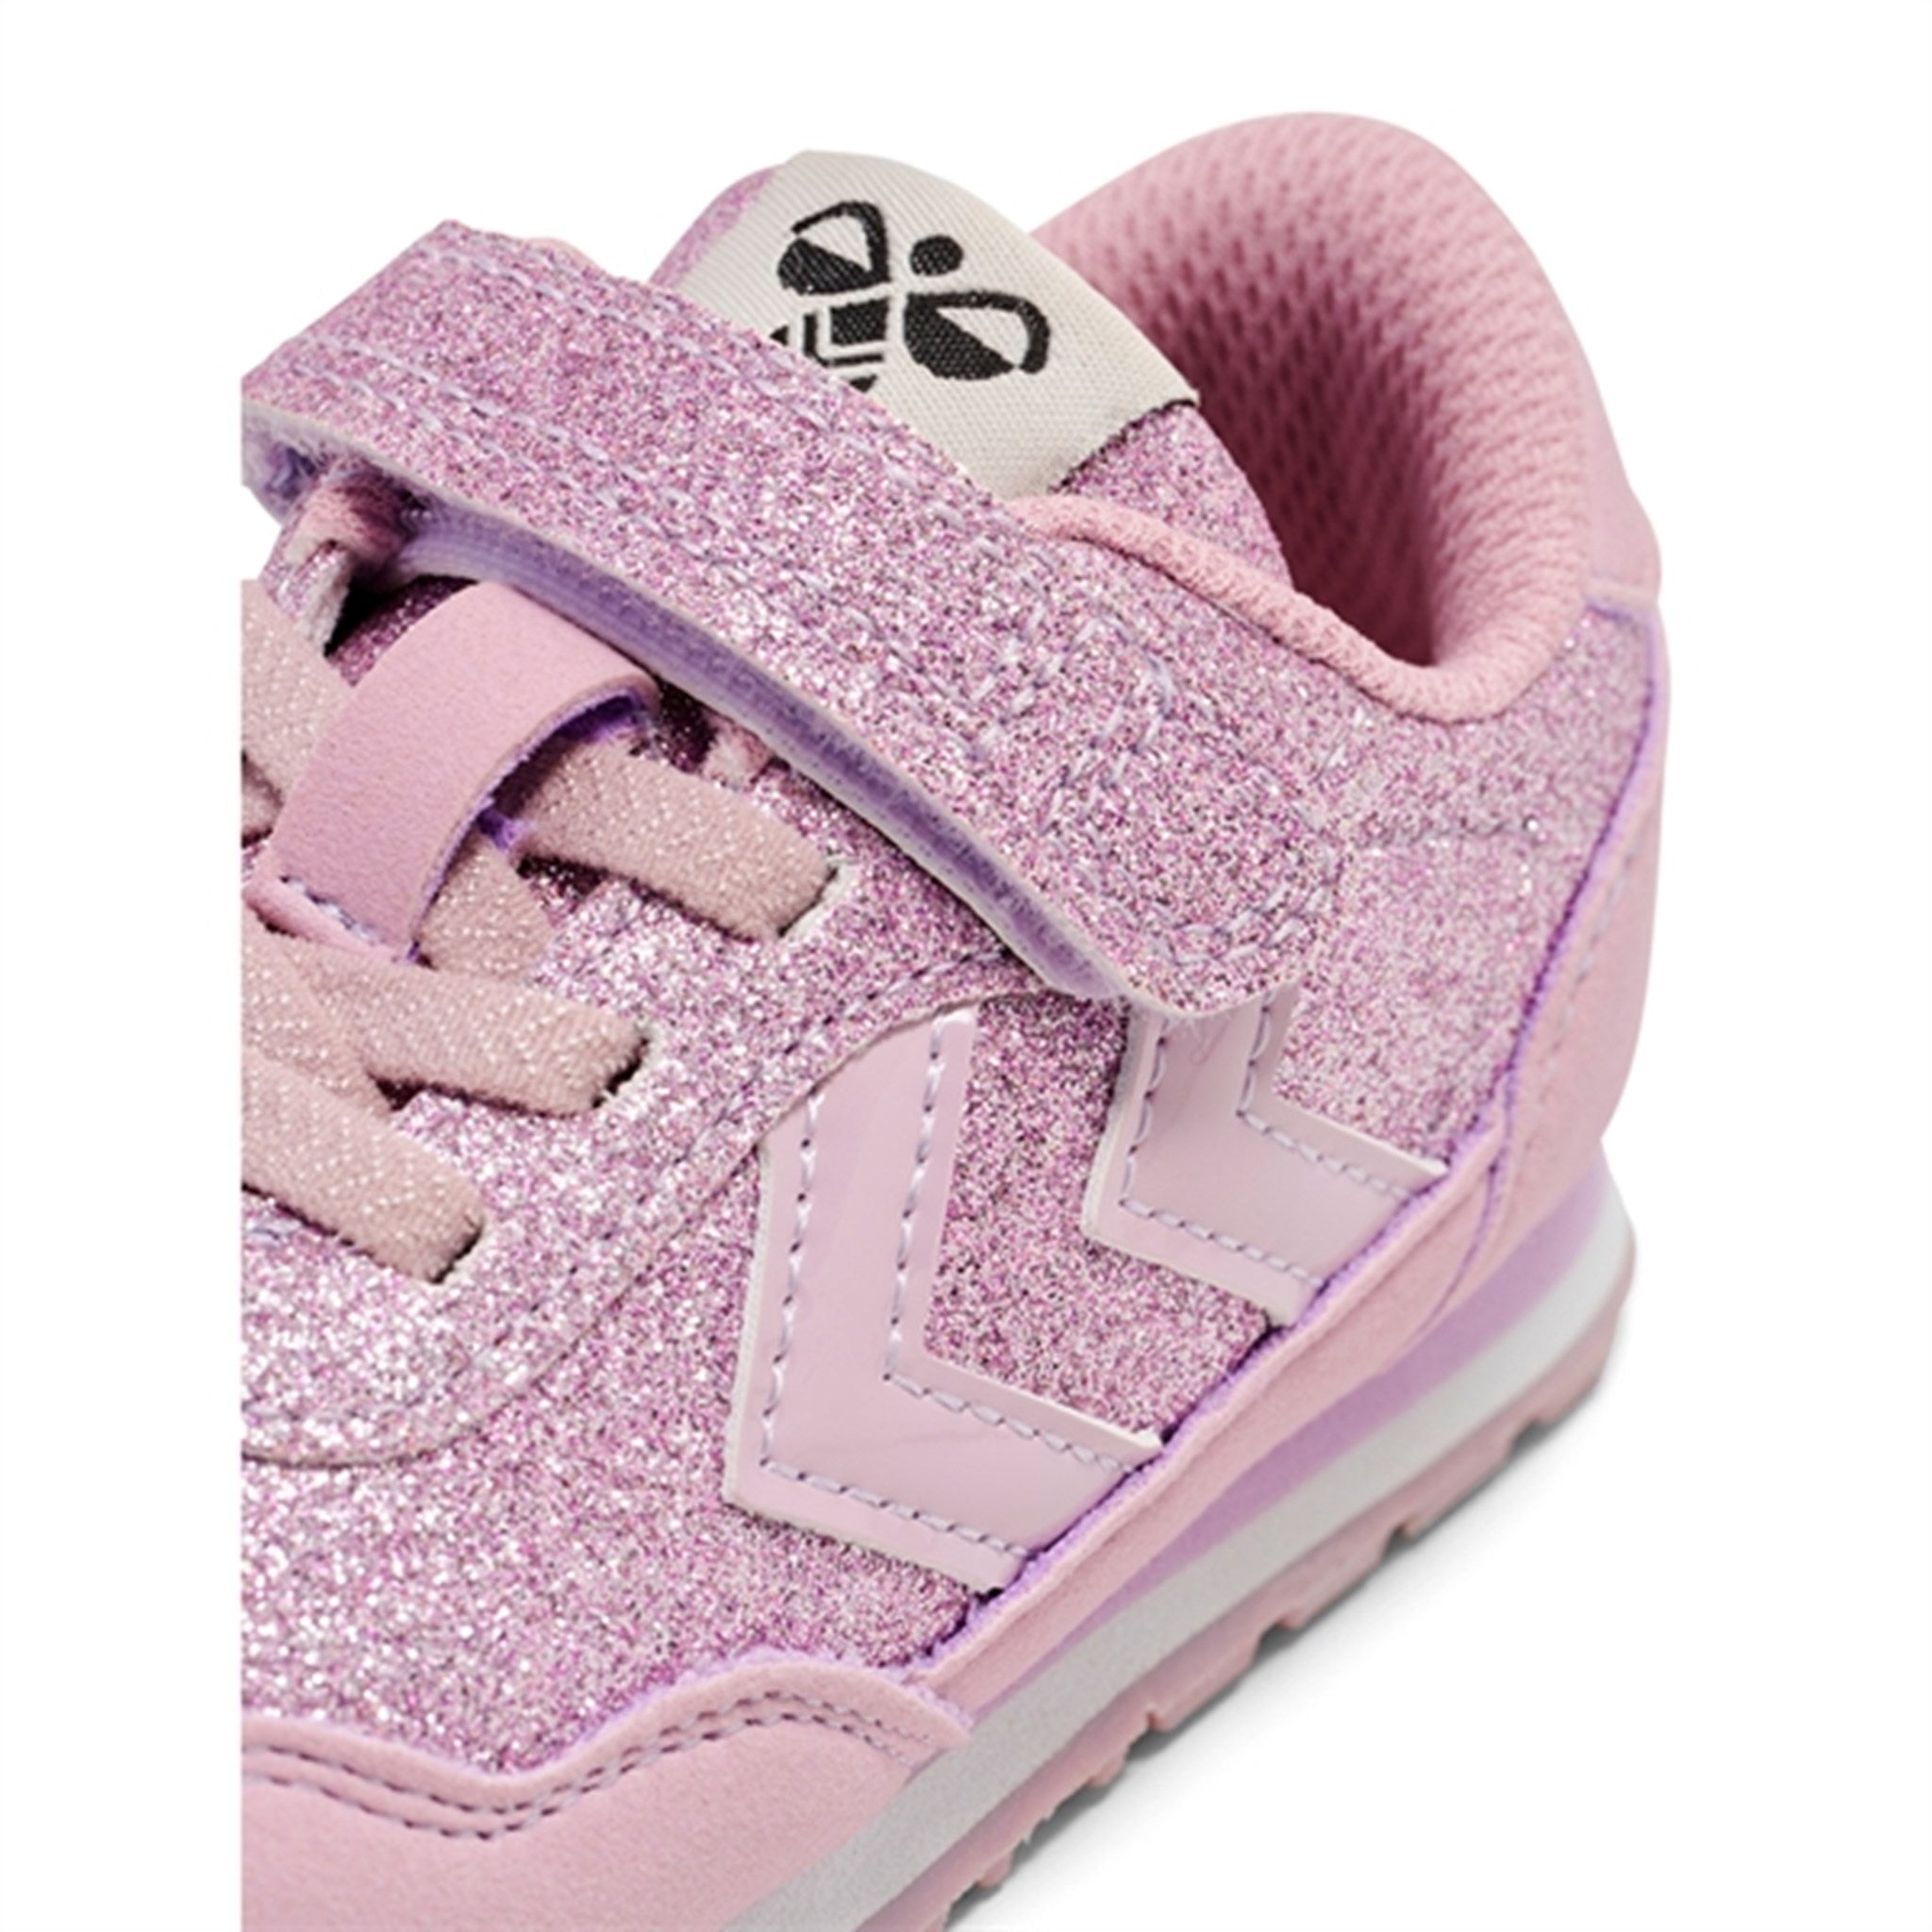 Hummel Reflex Glitter Infant Sneakers Lavender Frost 6